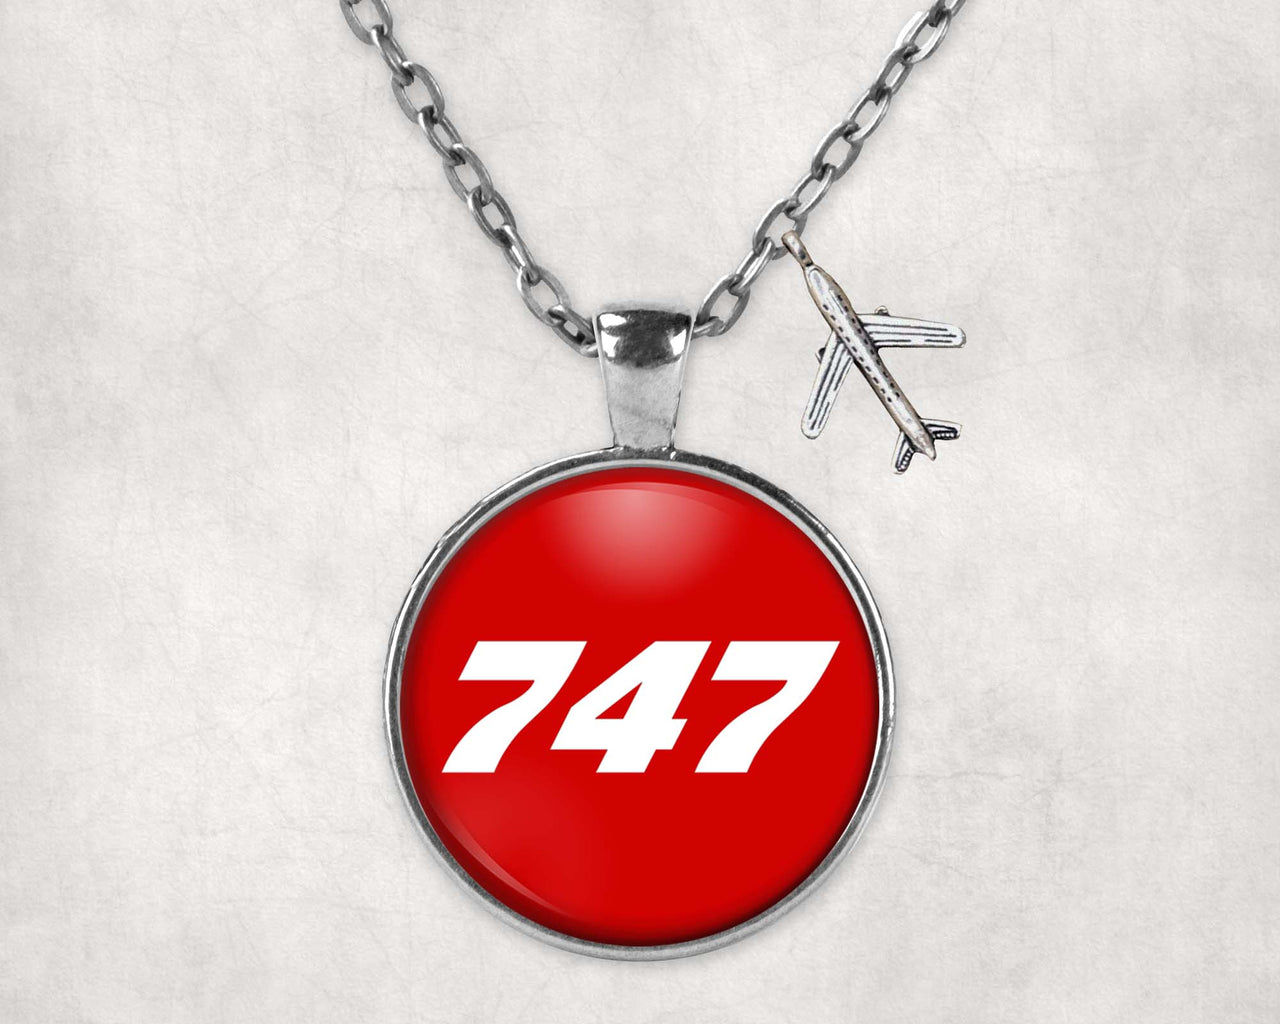 747 Flat Text Designed Necklaces